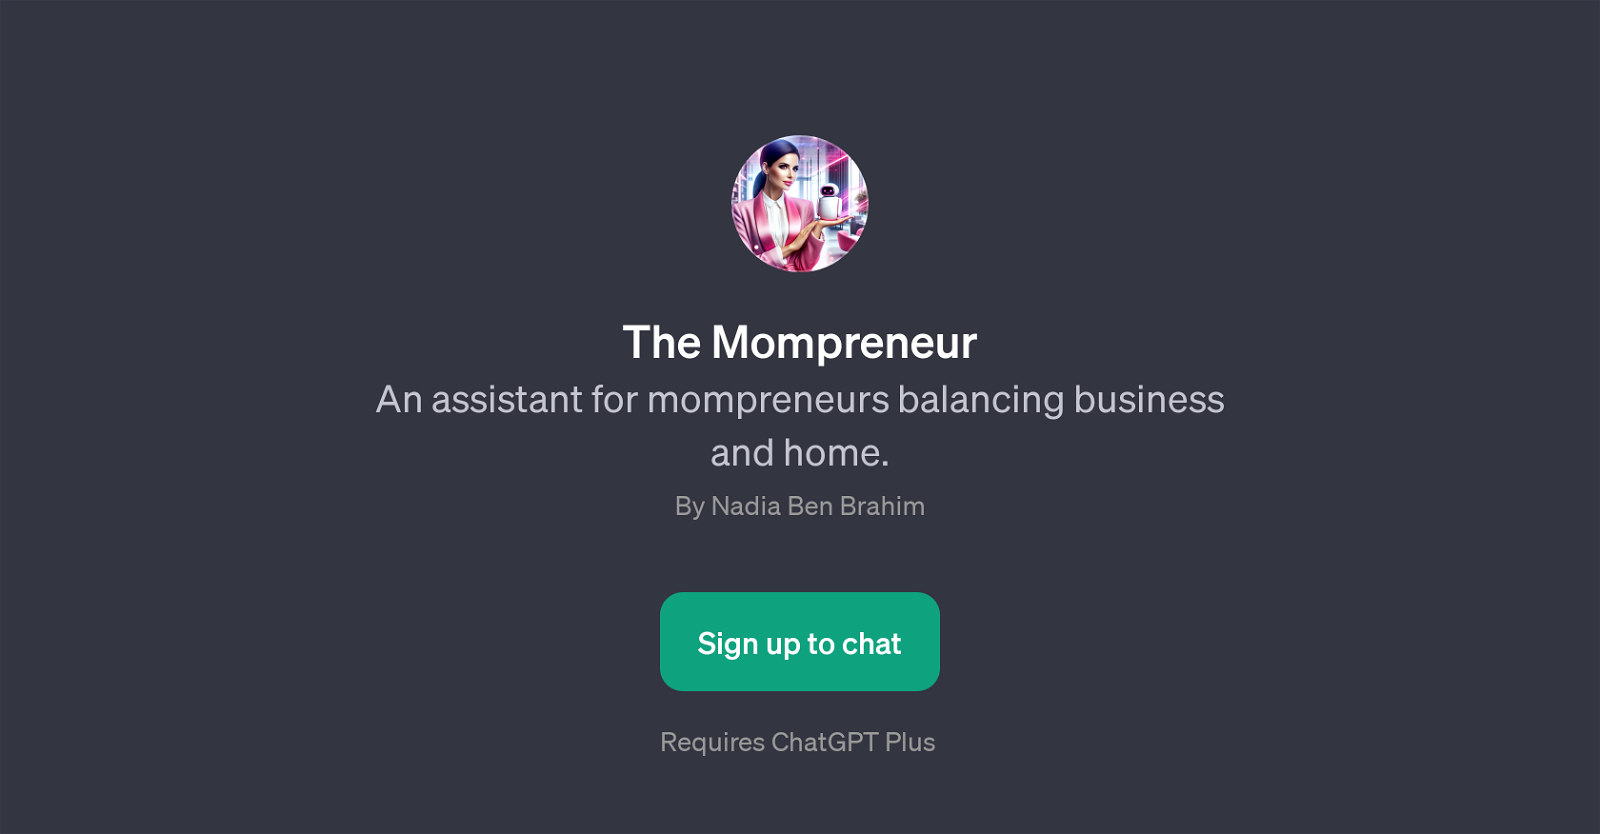 The Mompreneur website